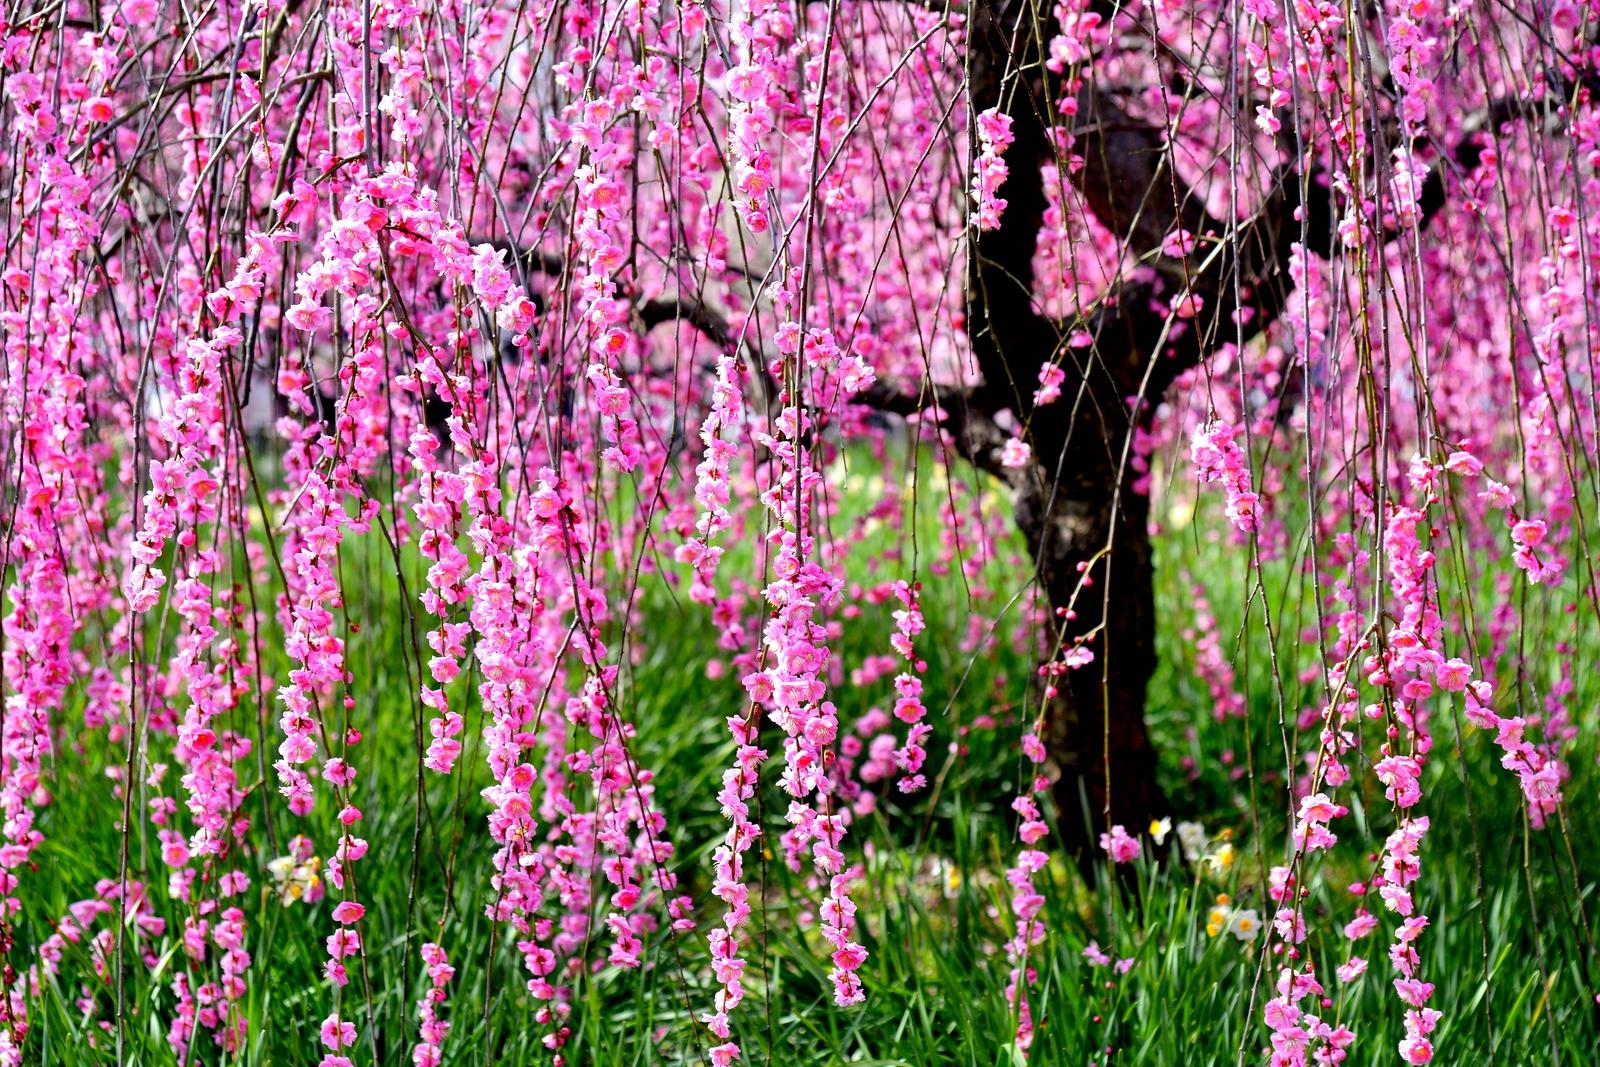 весна пришла изображение, весна пришла фото_Фоновое  изображение_ru.lovepik.com Бесплатная картинка